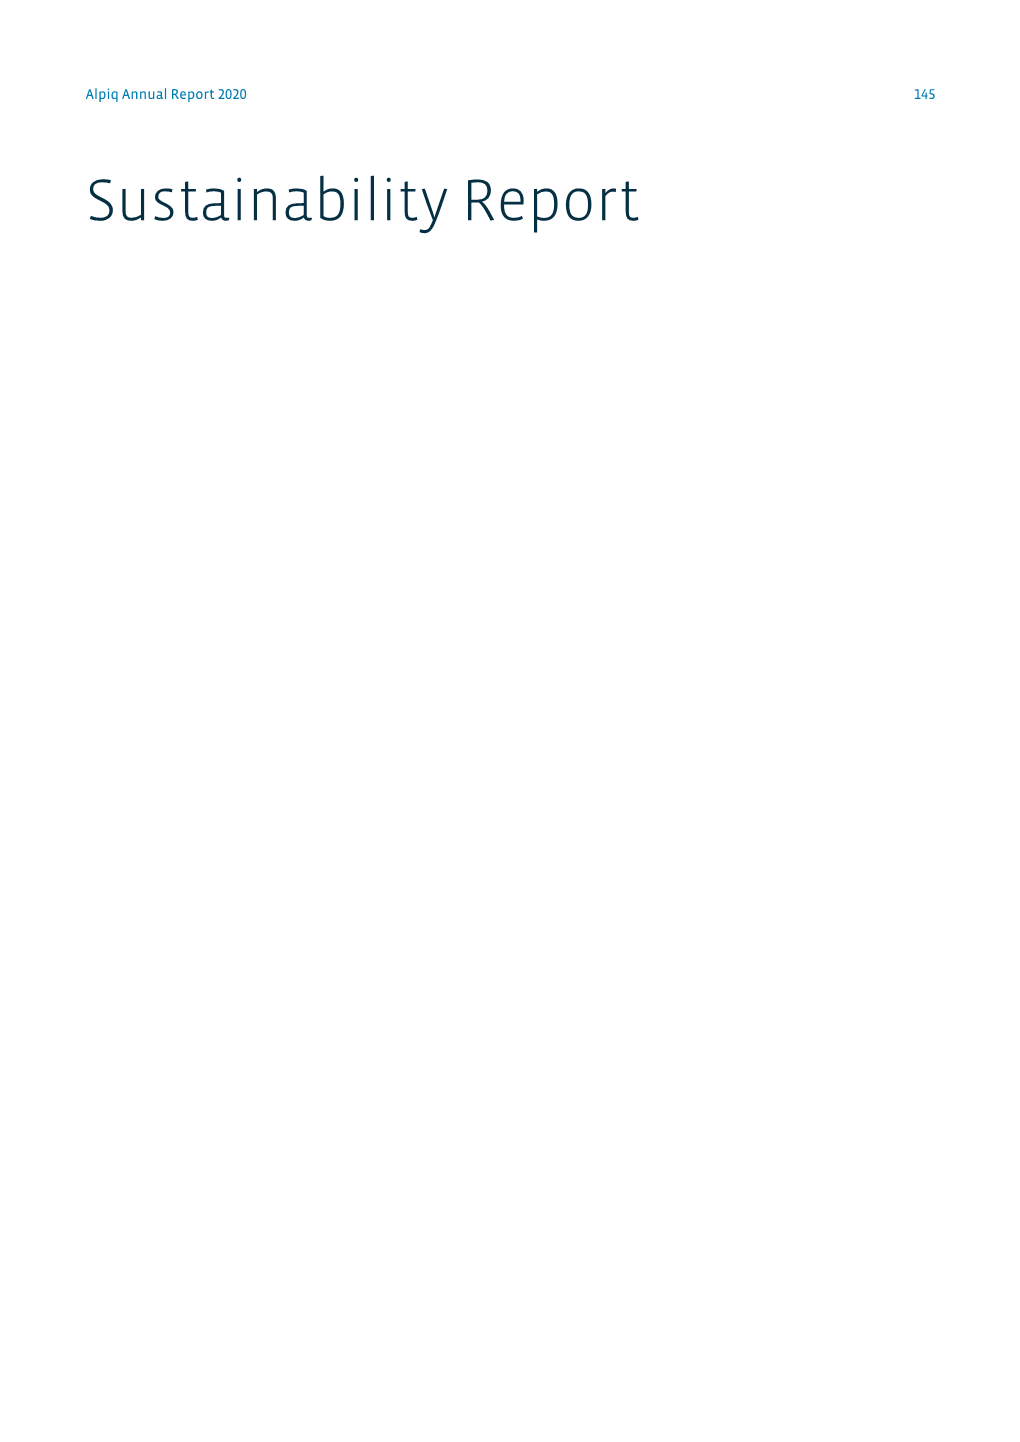 Sustainability Report Alpiq Annual Report 2020 Table of Contents 146